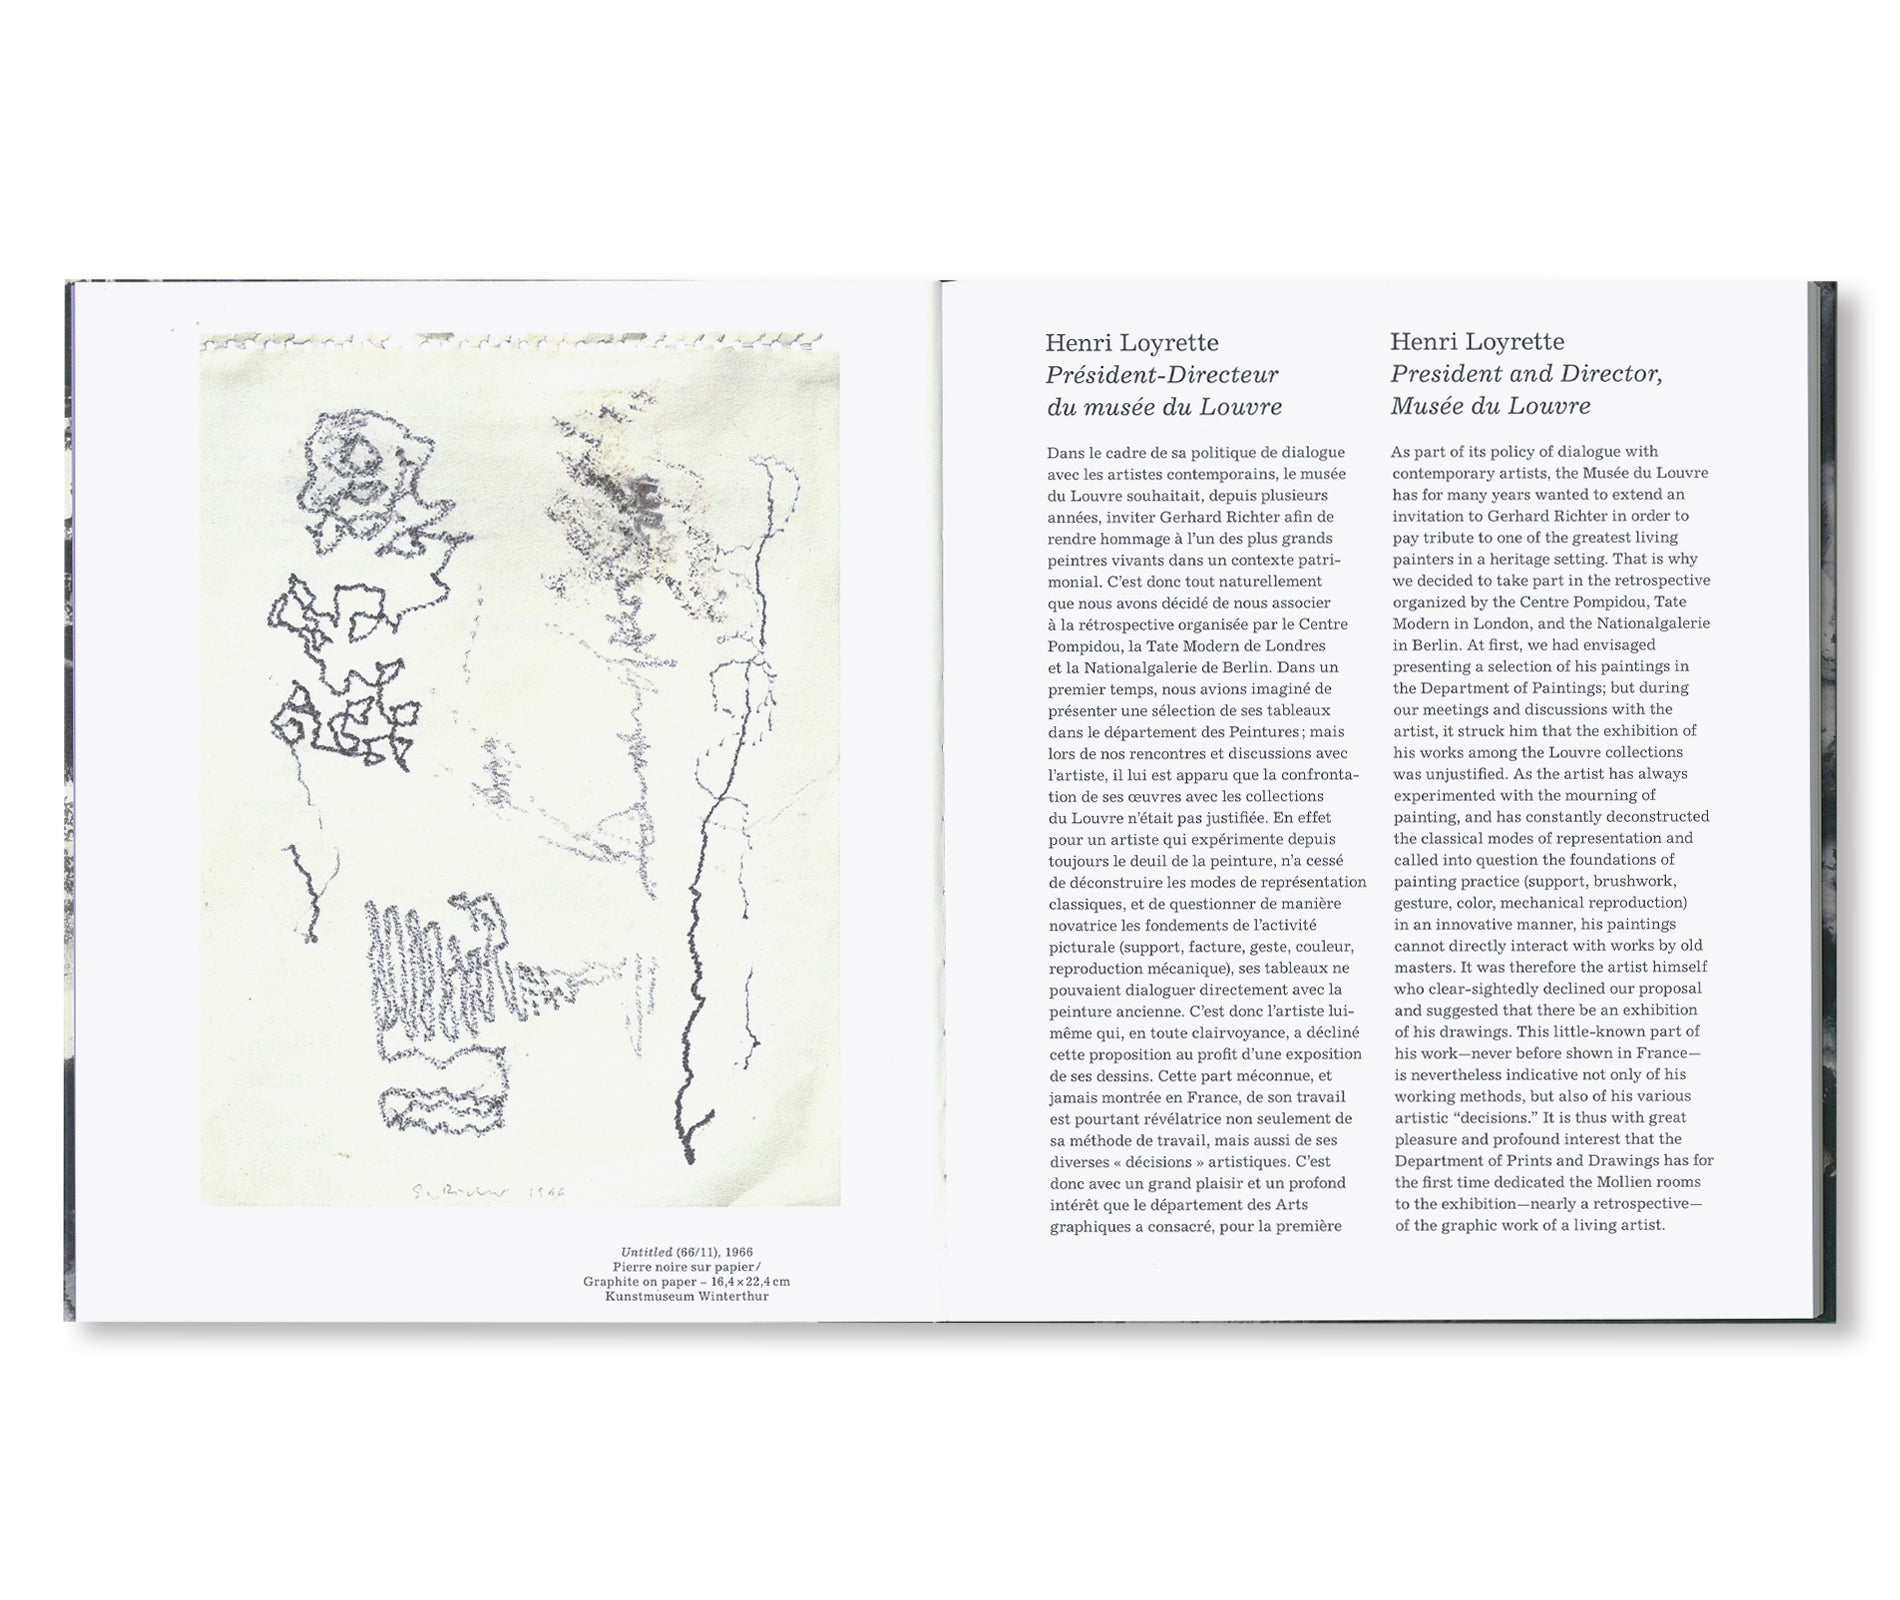 DRAWINGS & WATERCOLORS, 1957-2008 by Gerhard Richter